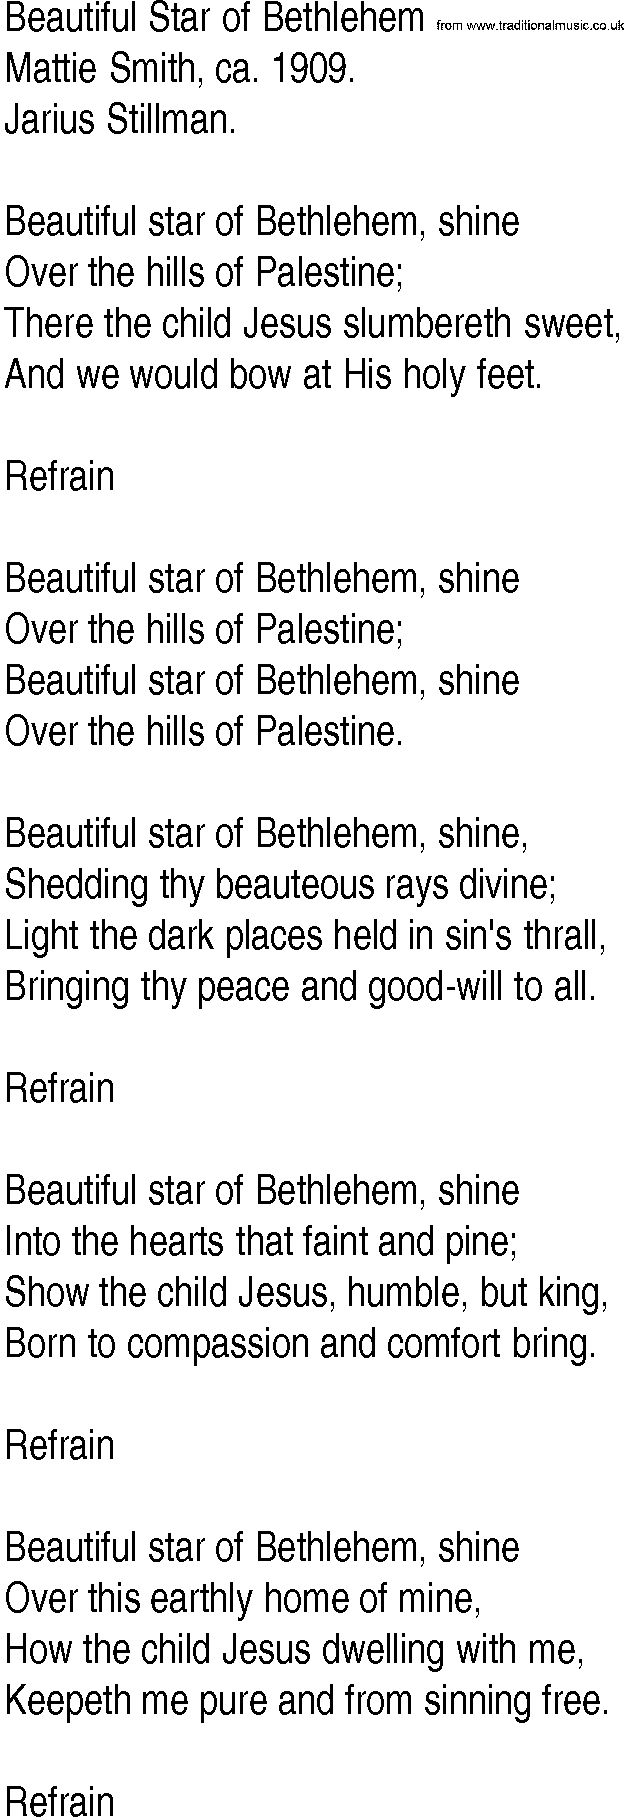 Hymn and Gospel Song: Beautiful Star of Bethlehem by Mattie Smith ca lyrics